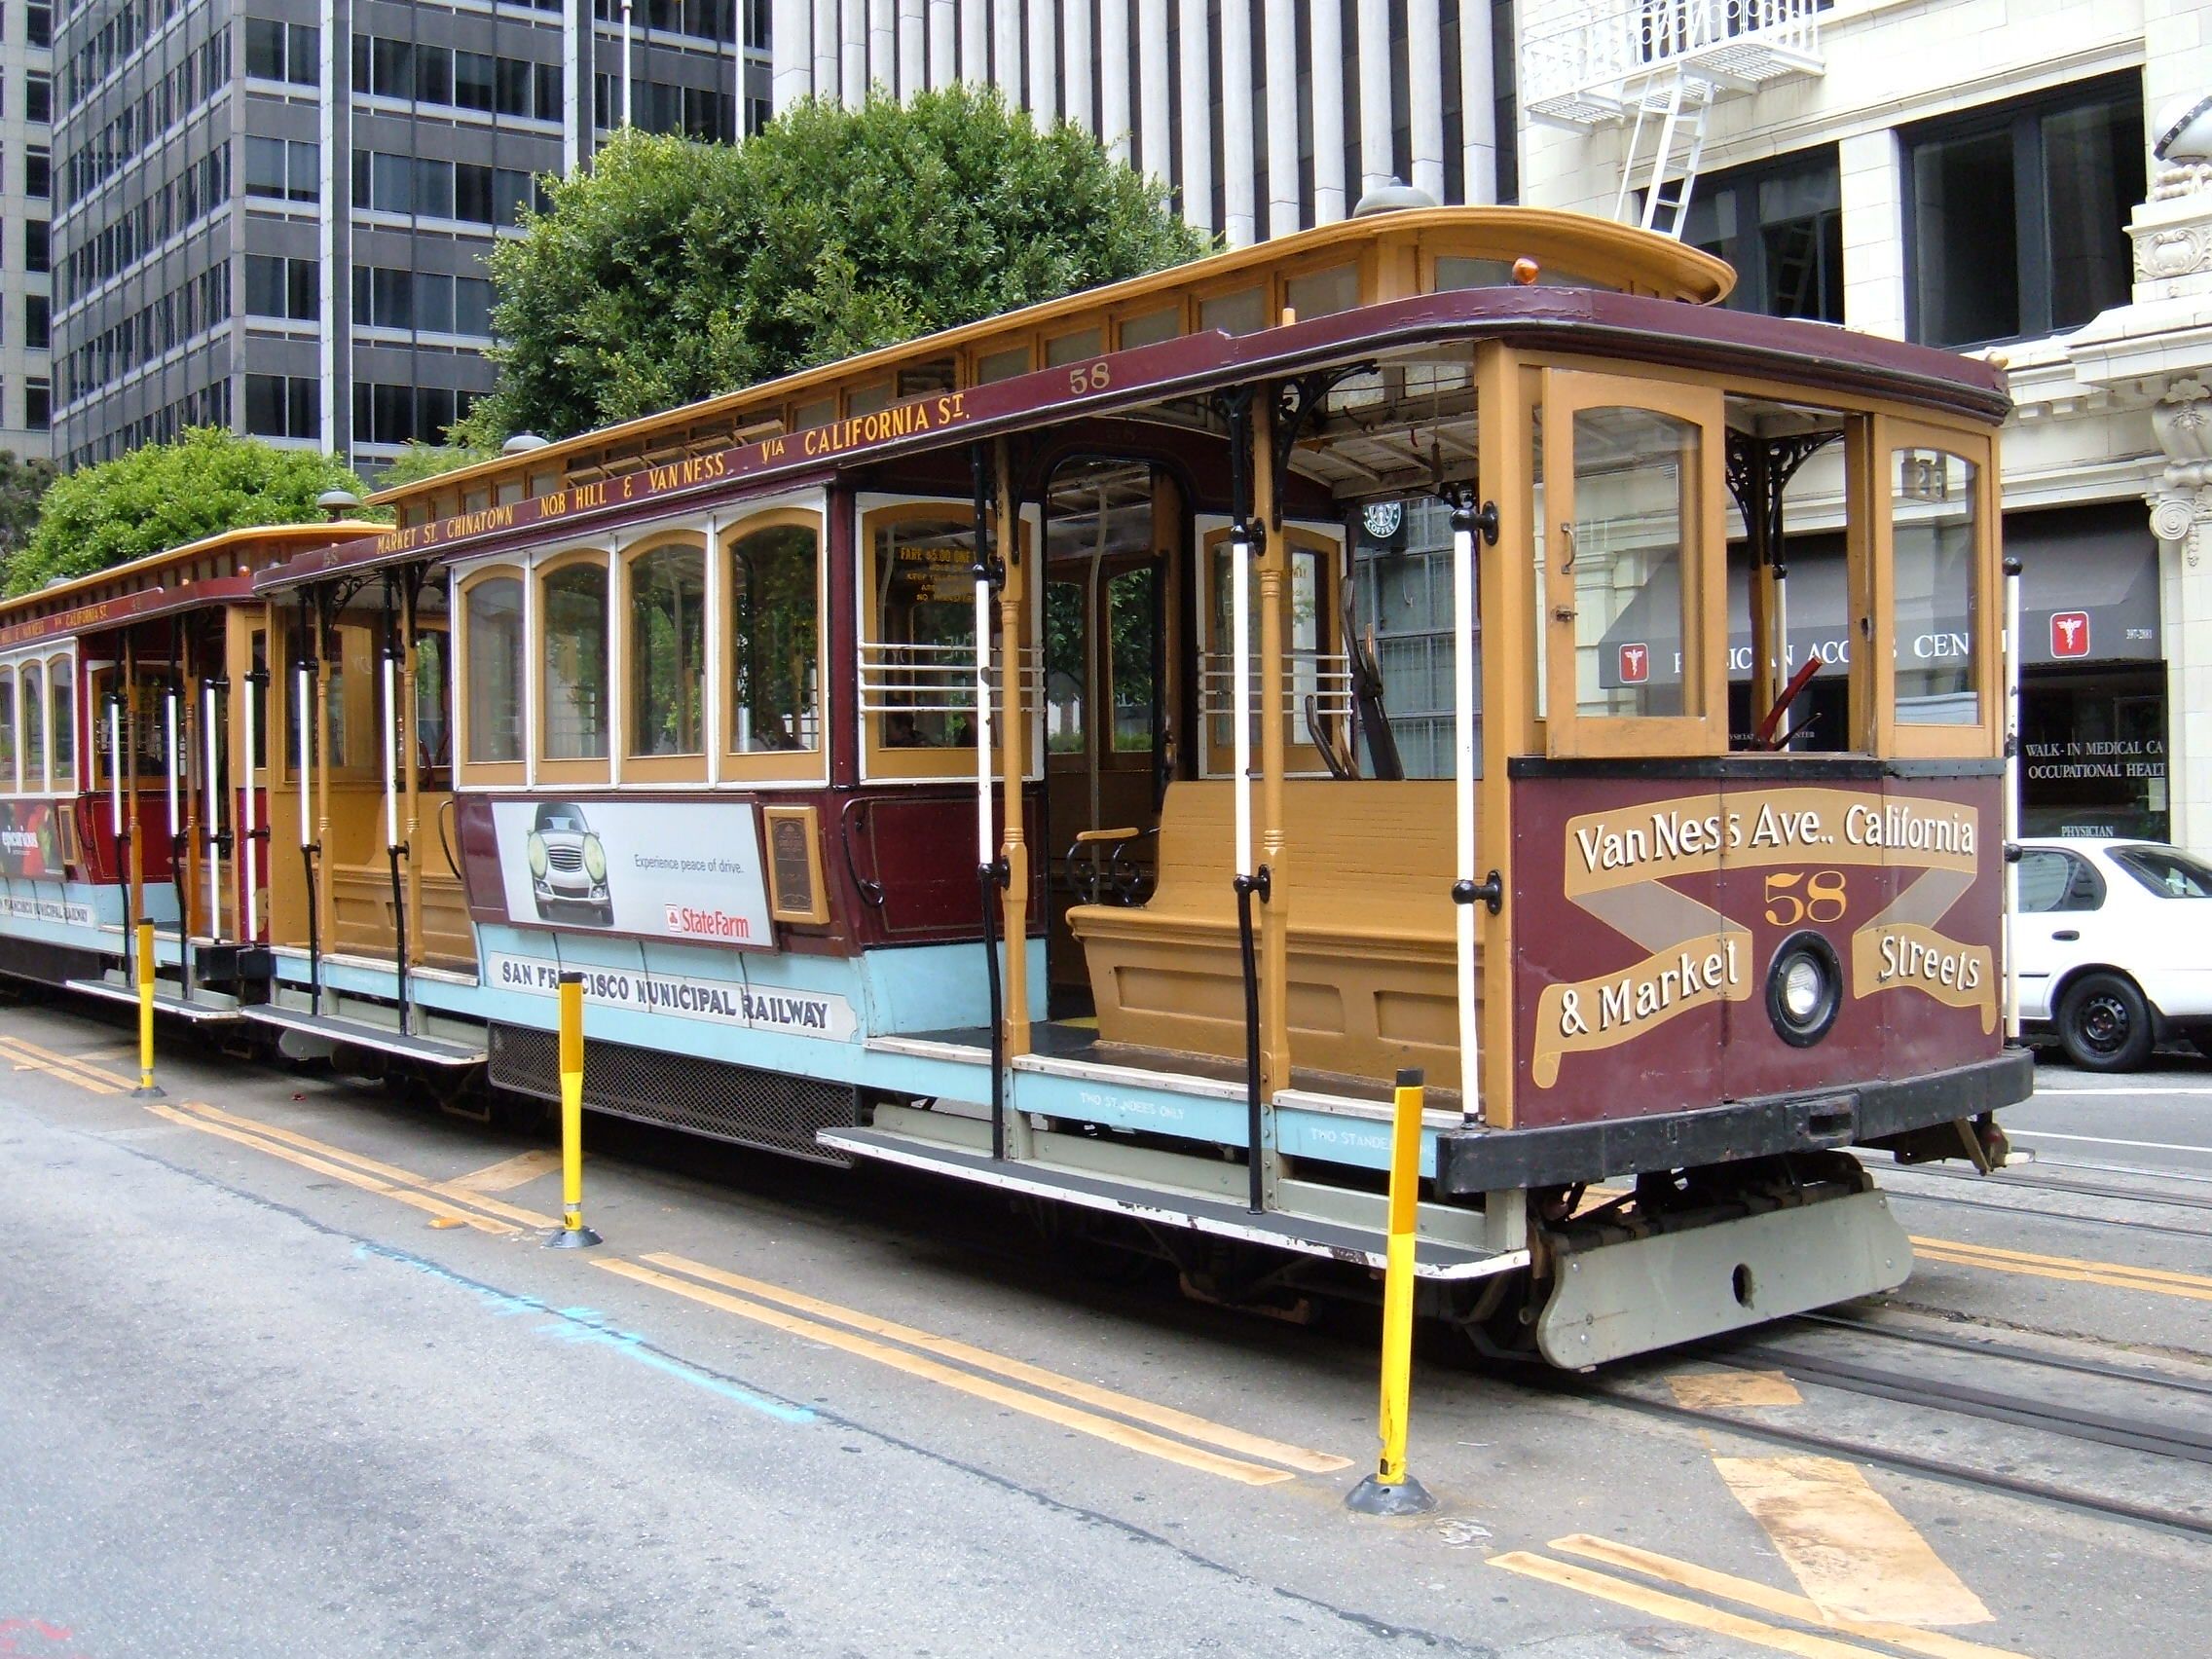 San Francisco cable car no. 58 on California St